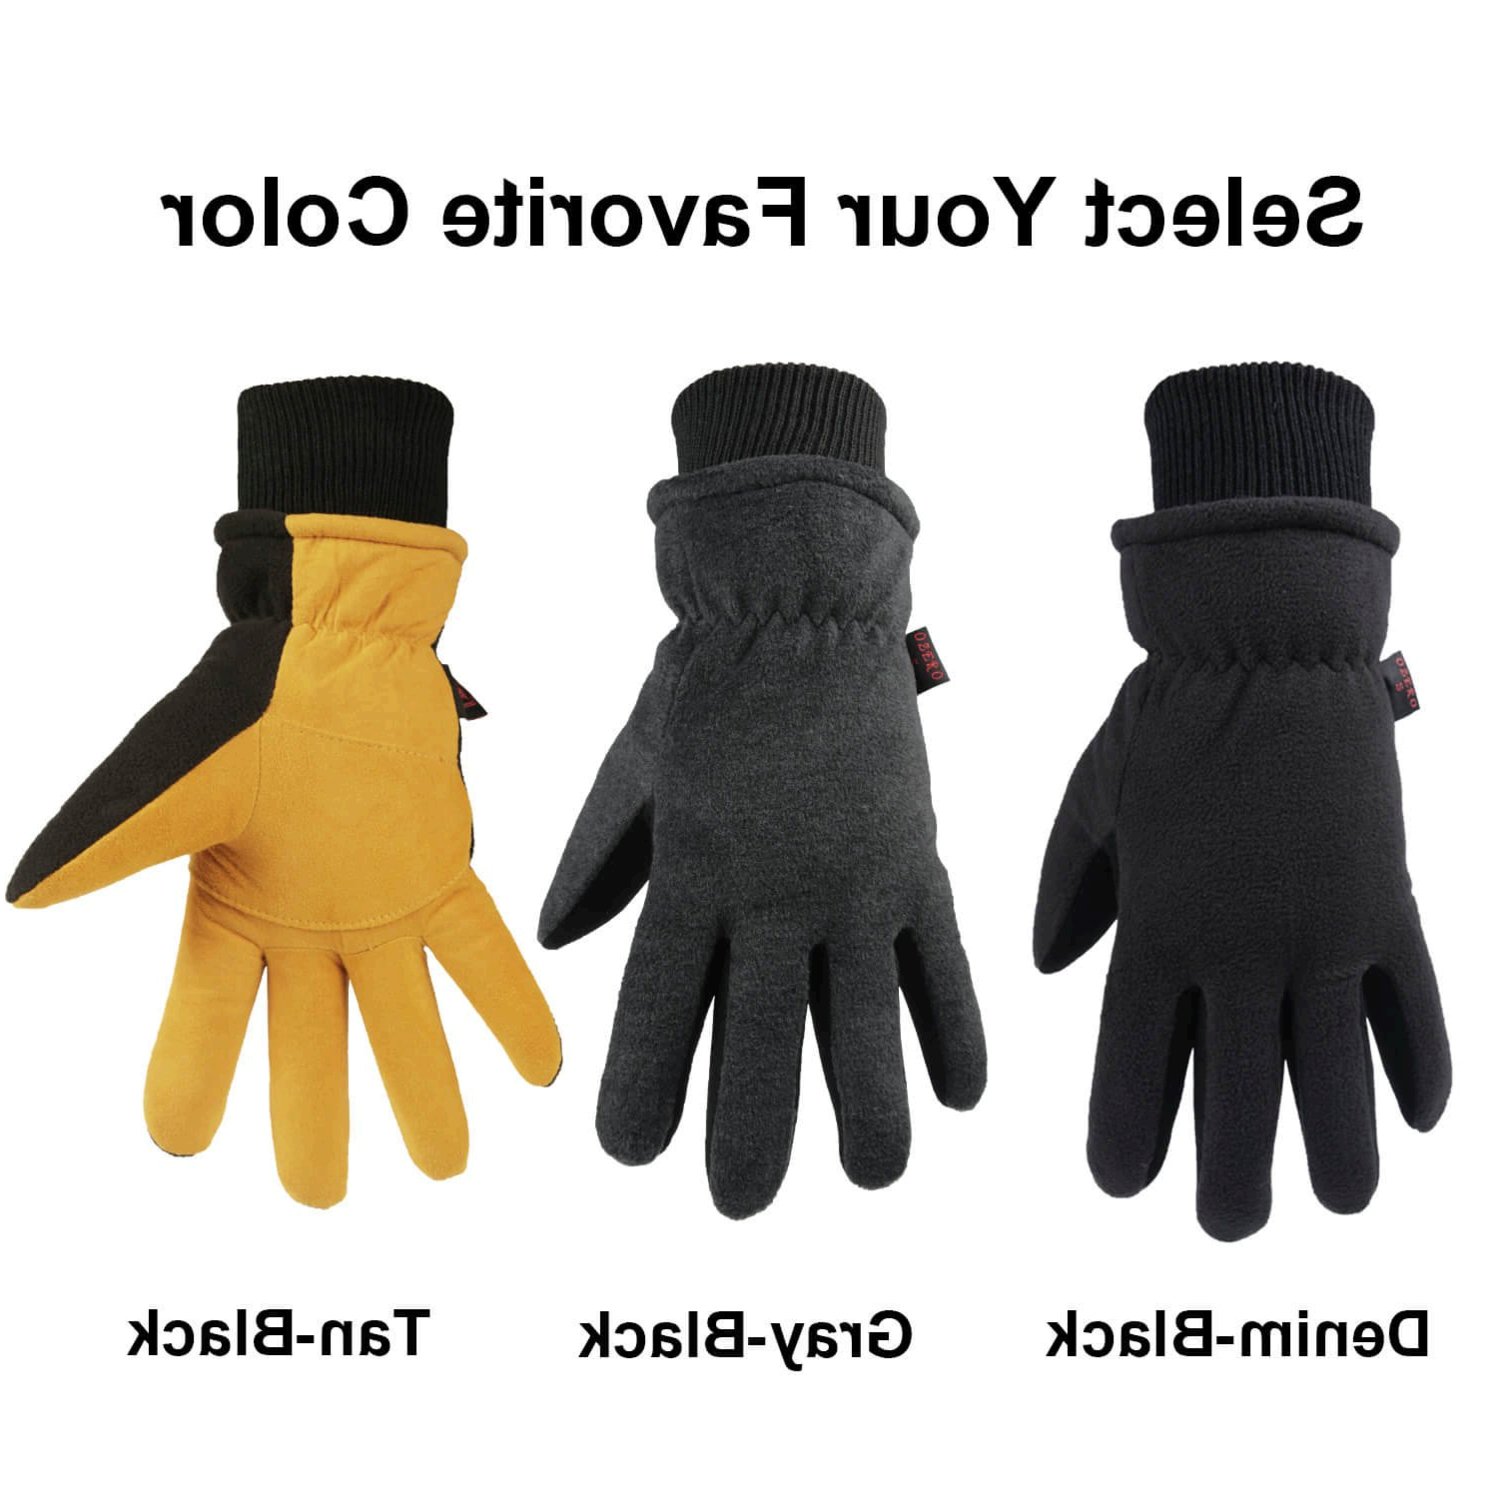 OZERO Work Gloves -30°F Coldproof Winter Ski Snow Glove - Deerskin ...